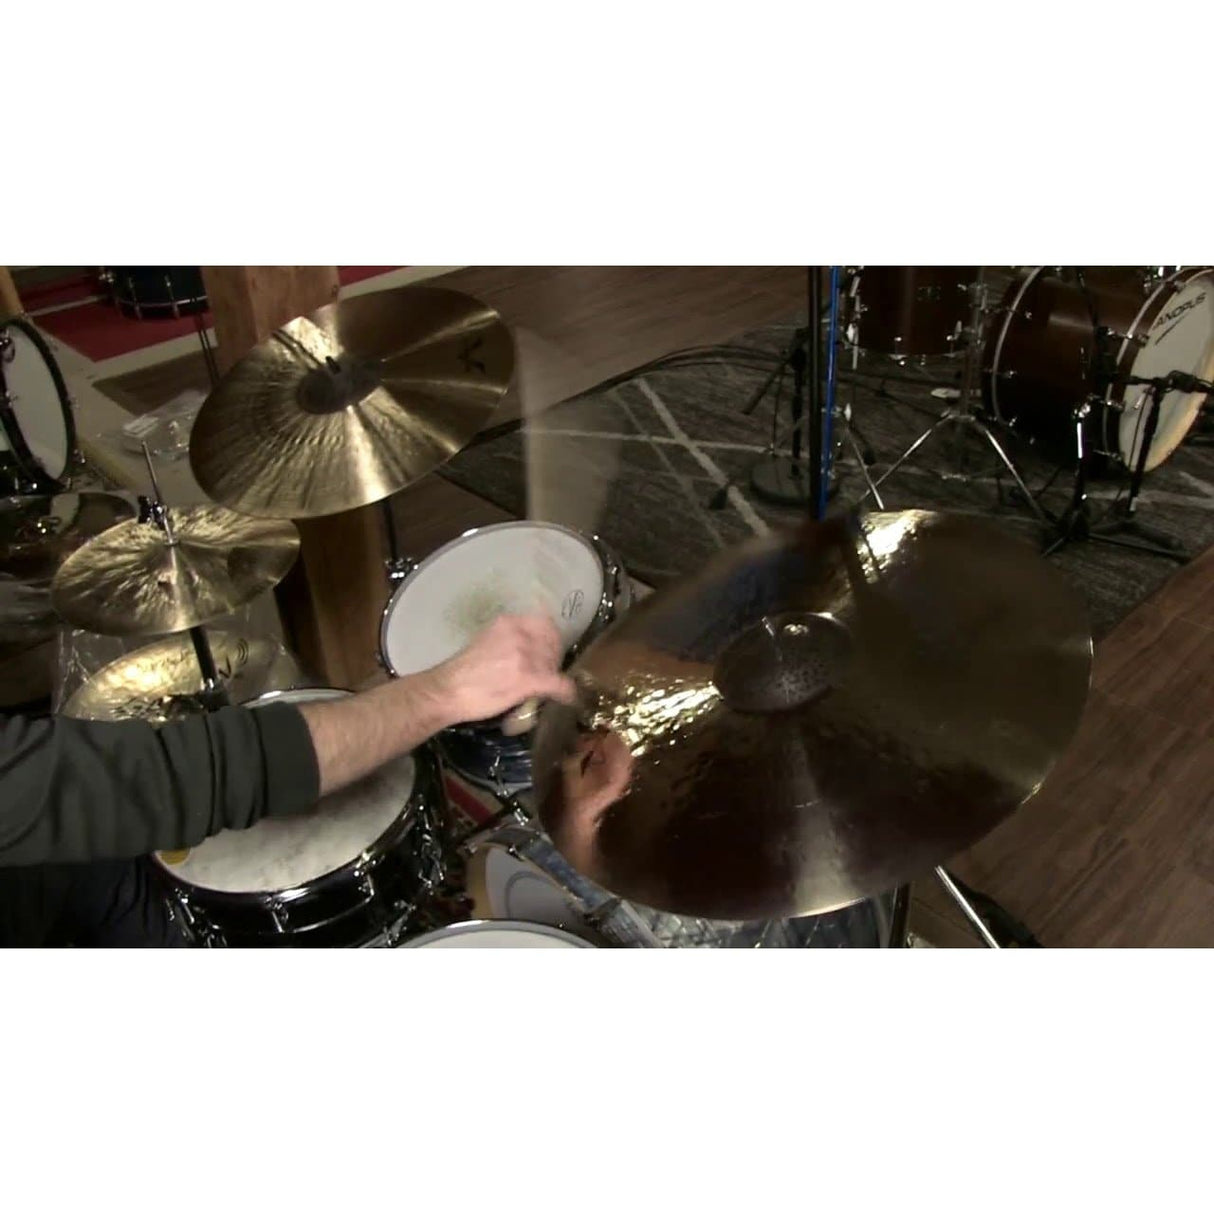 Sabian Prototype HH Ride Cymbal 22" 2656 grams